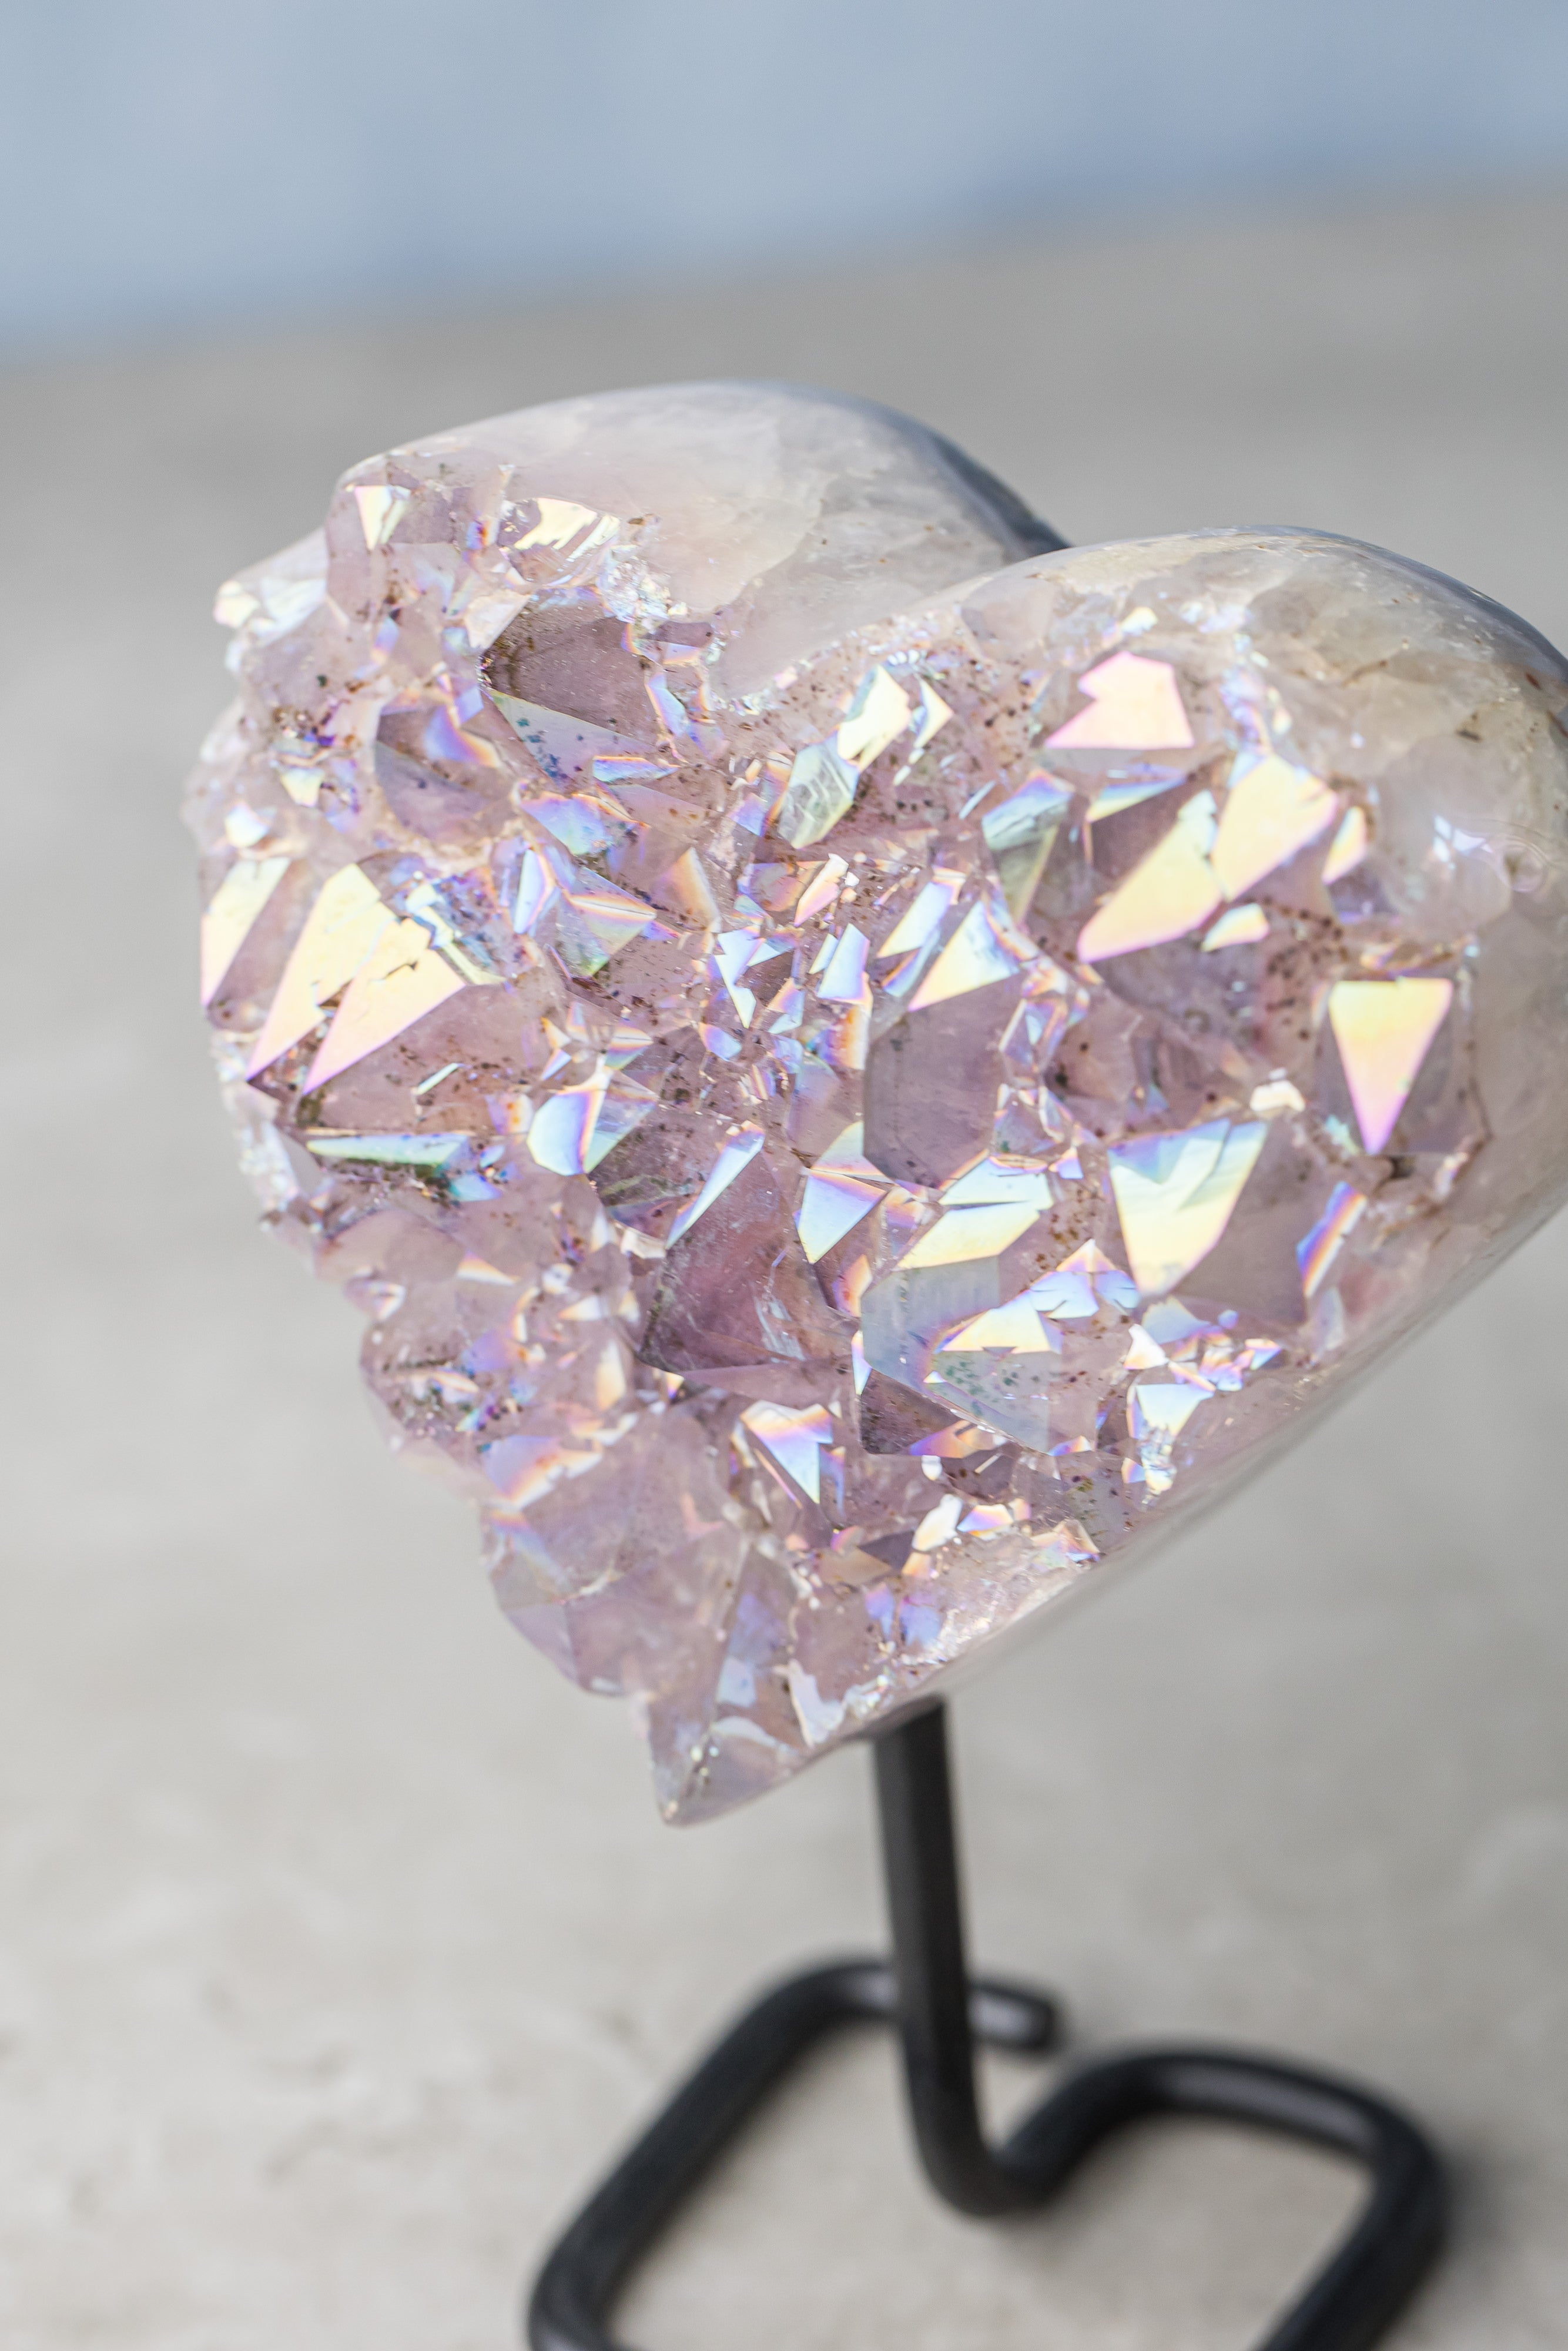 Heart Shaped Aura Amethyst on Stands - Healing Crystal for Love, Spiritual Growth &amp; Third Eye Chakra Balance - Everyday Rocks